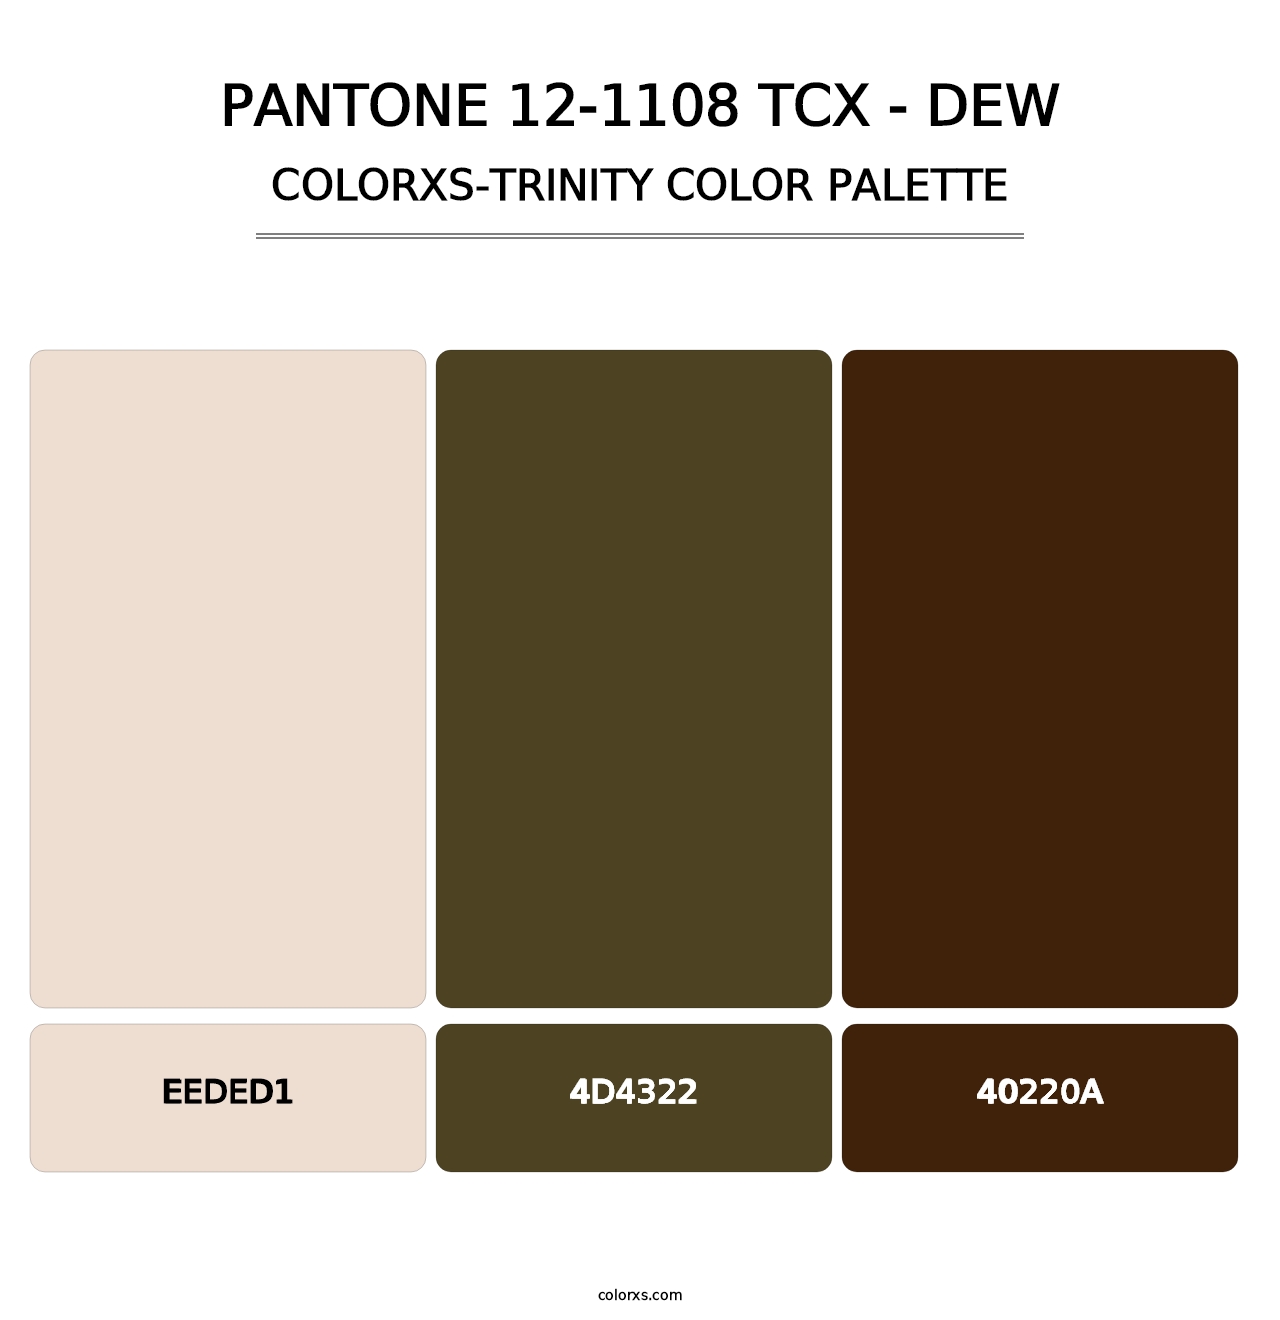 PANTONE 12-1108 TCX - Dew - Colorxs Trinity Palette